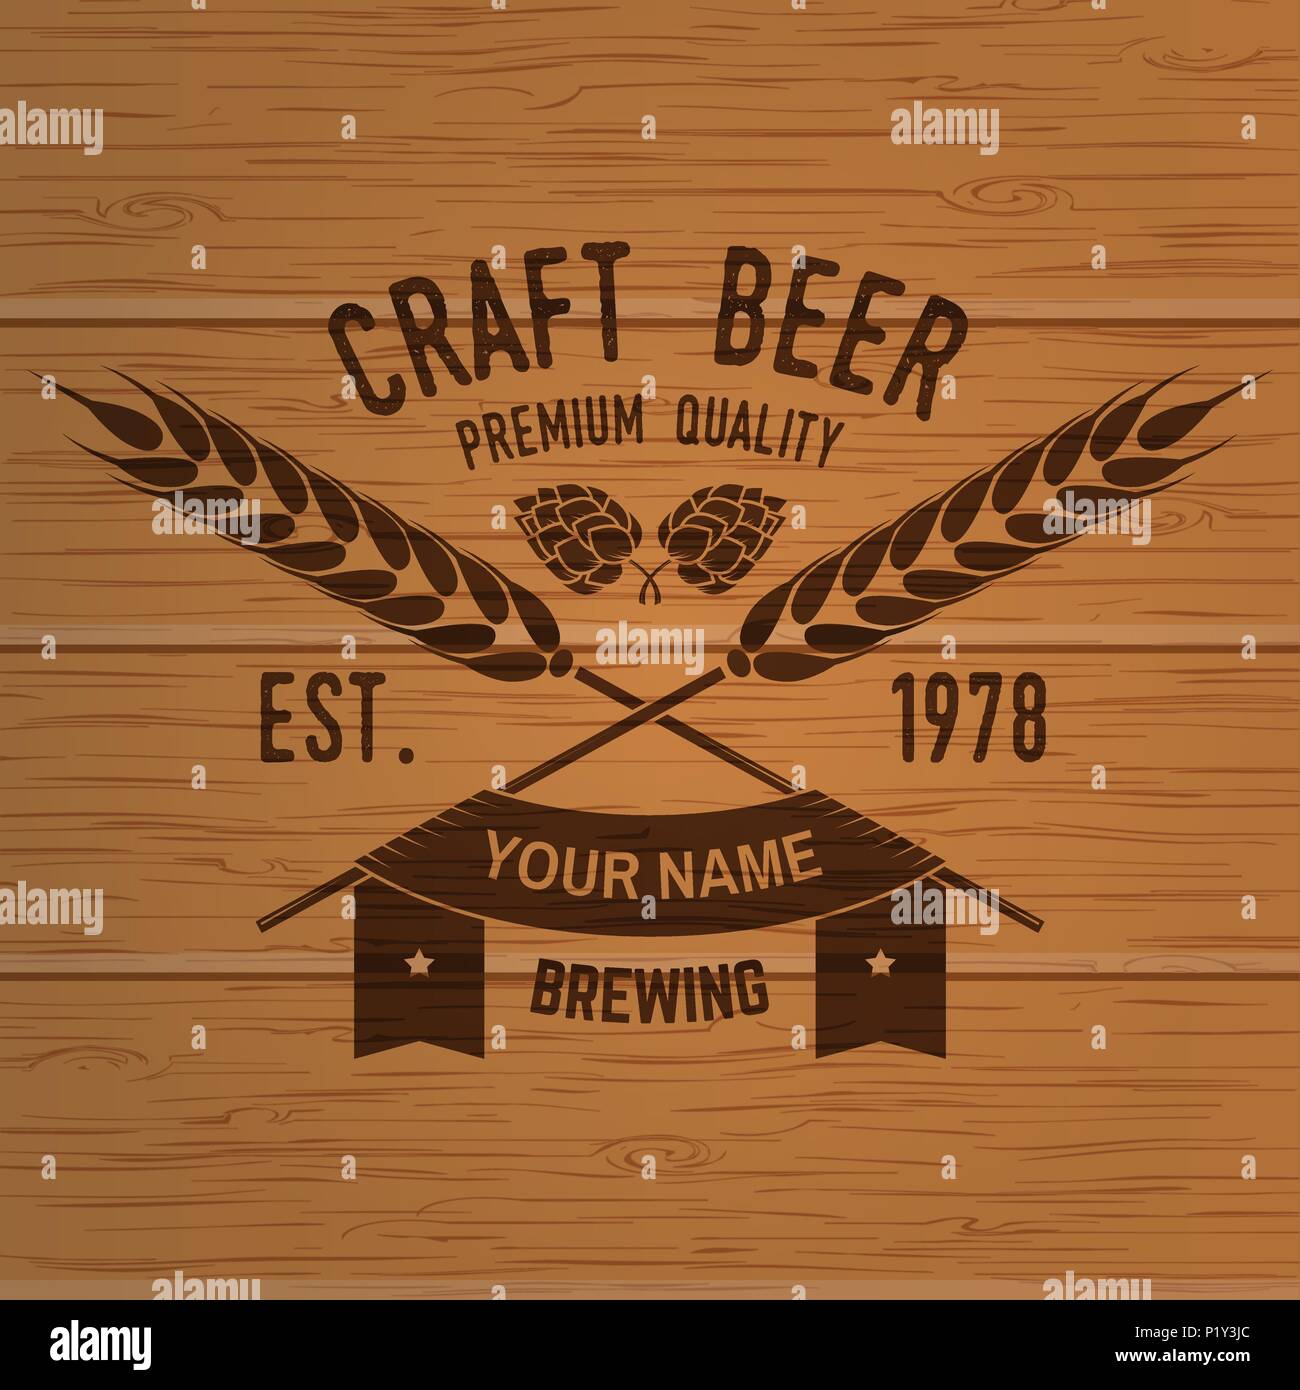 Craft Beer badge. Vector illustration. Vintage design for bar, pub and restaurant business. Photorealistic wood engraved craft beer design. Stock Vector